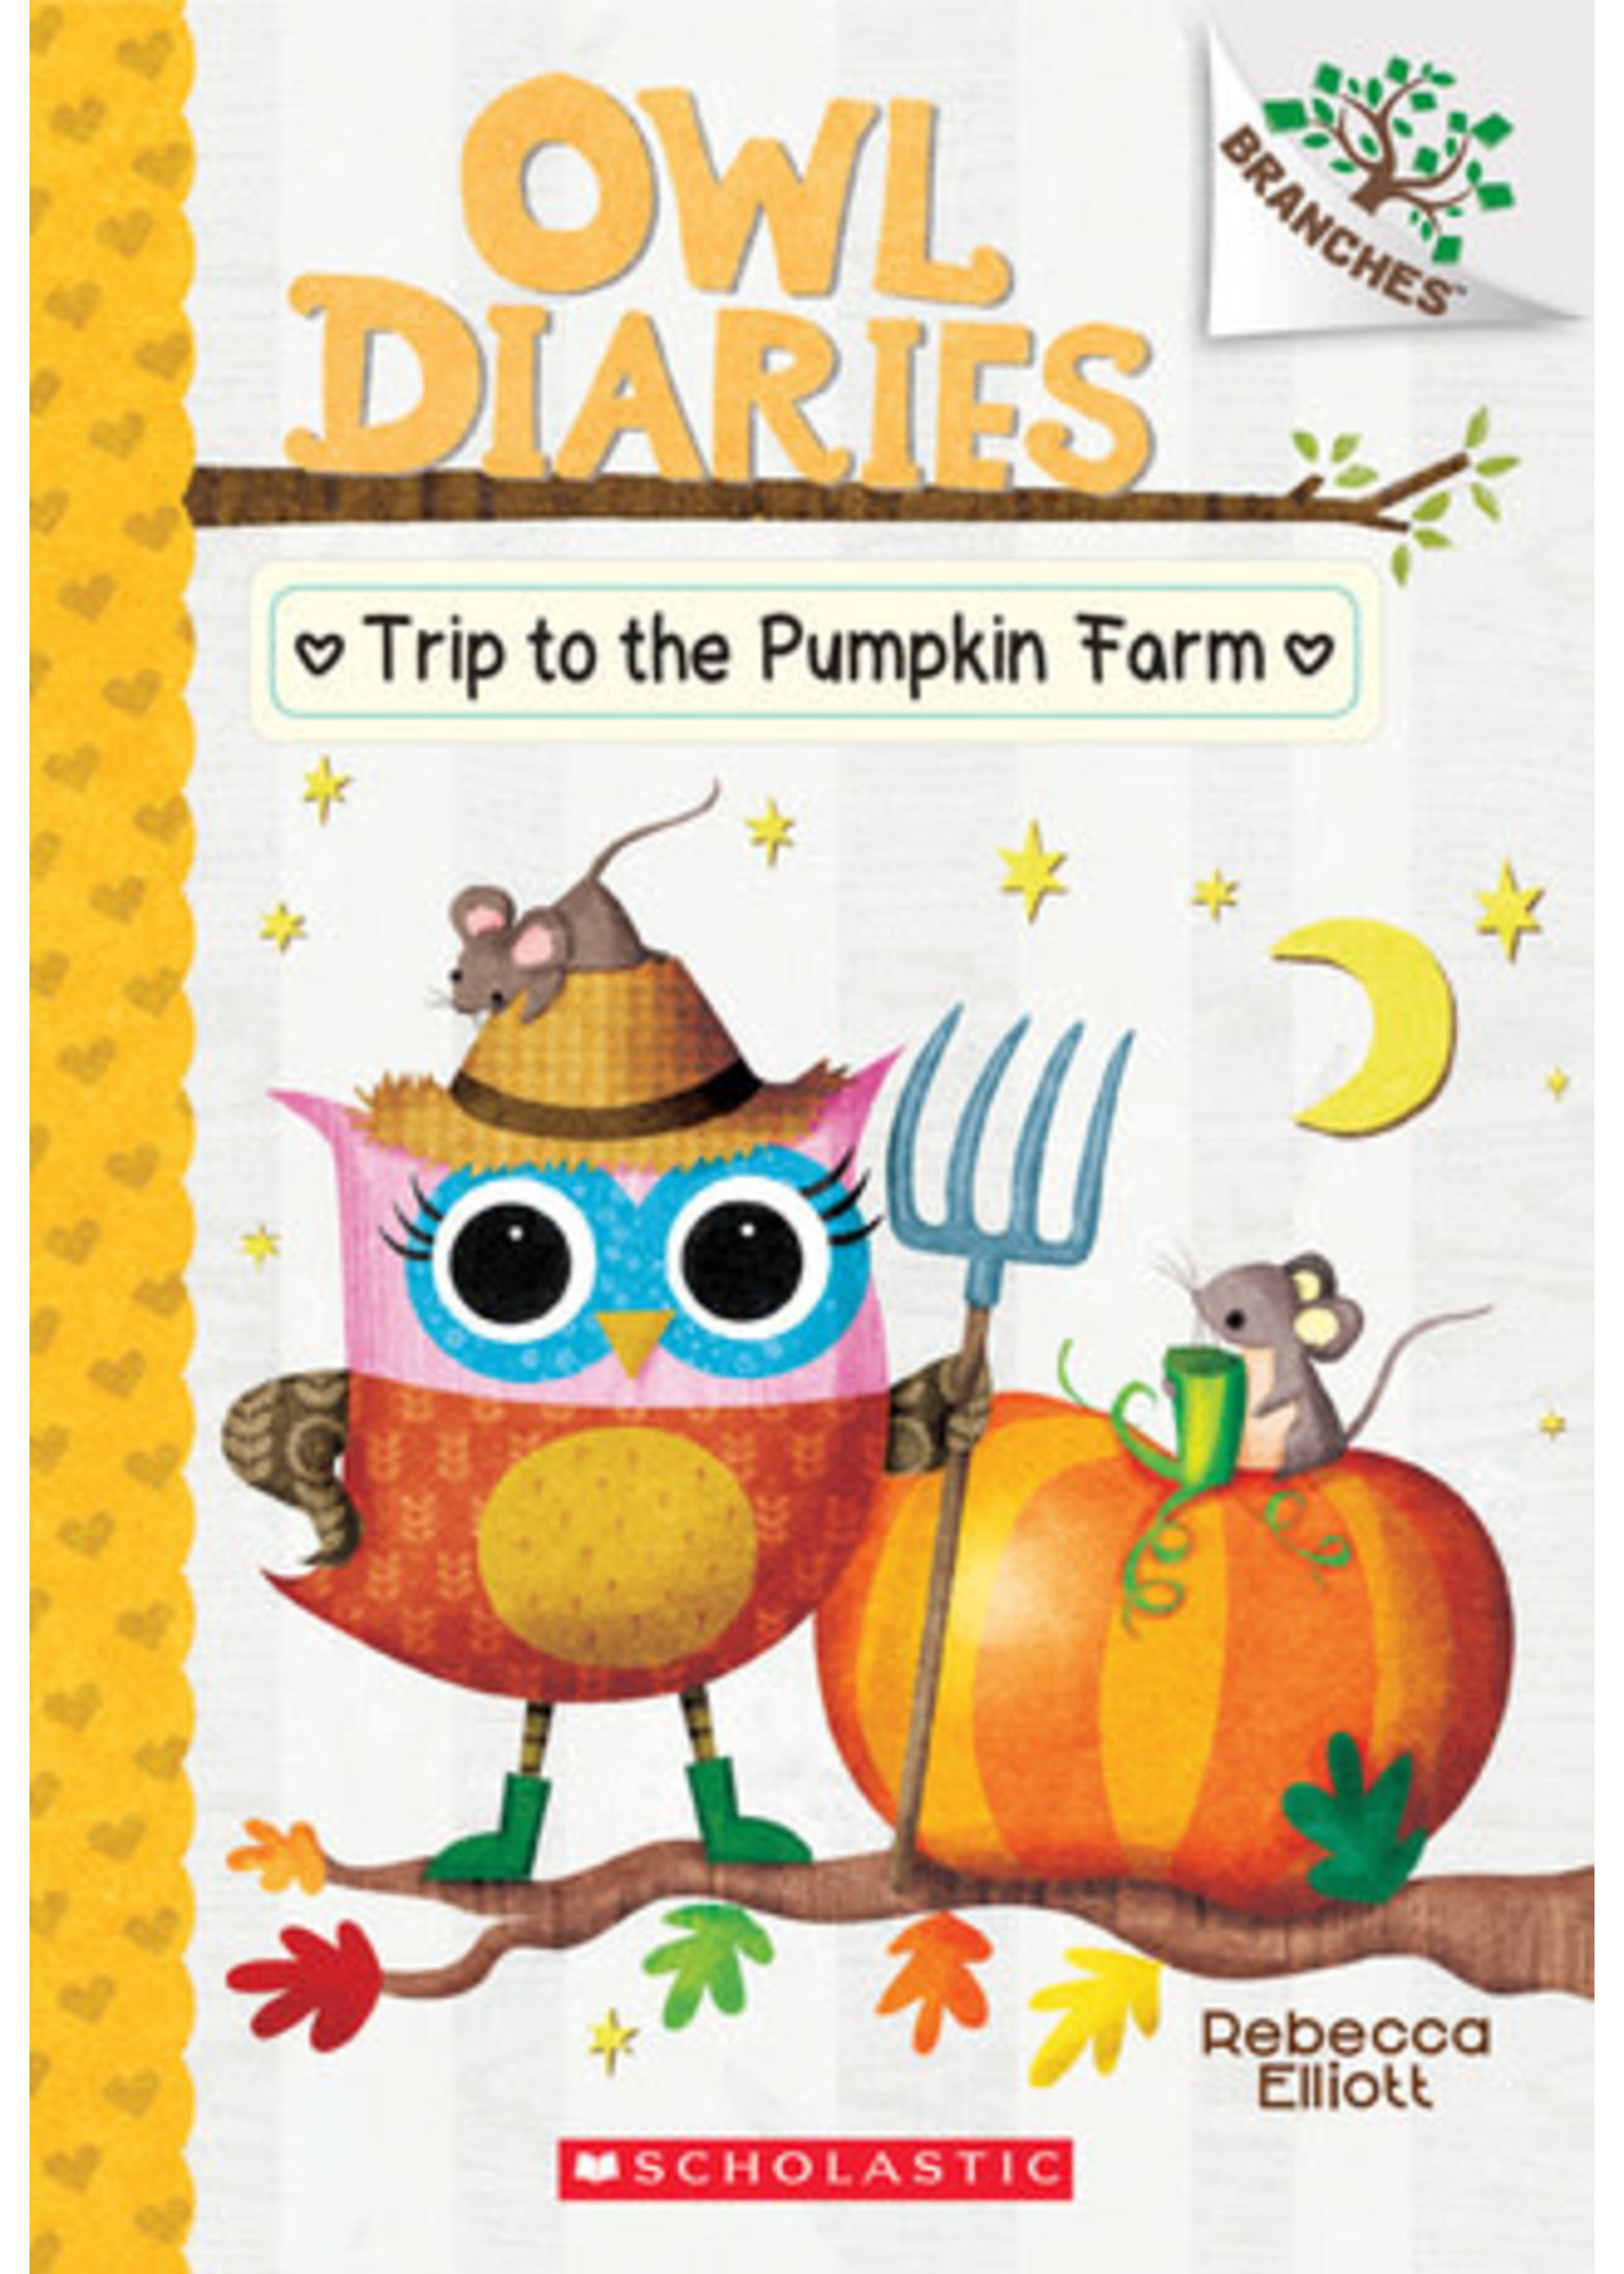 Trip to the Pumpkin Farm (Owl Diaries #11) by Rebecca Elliott